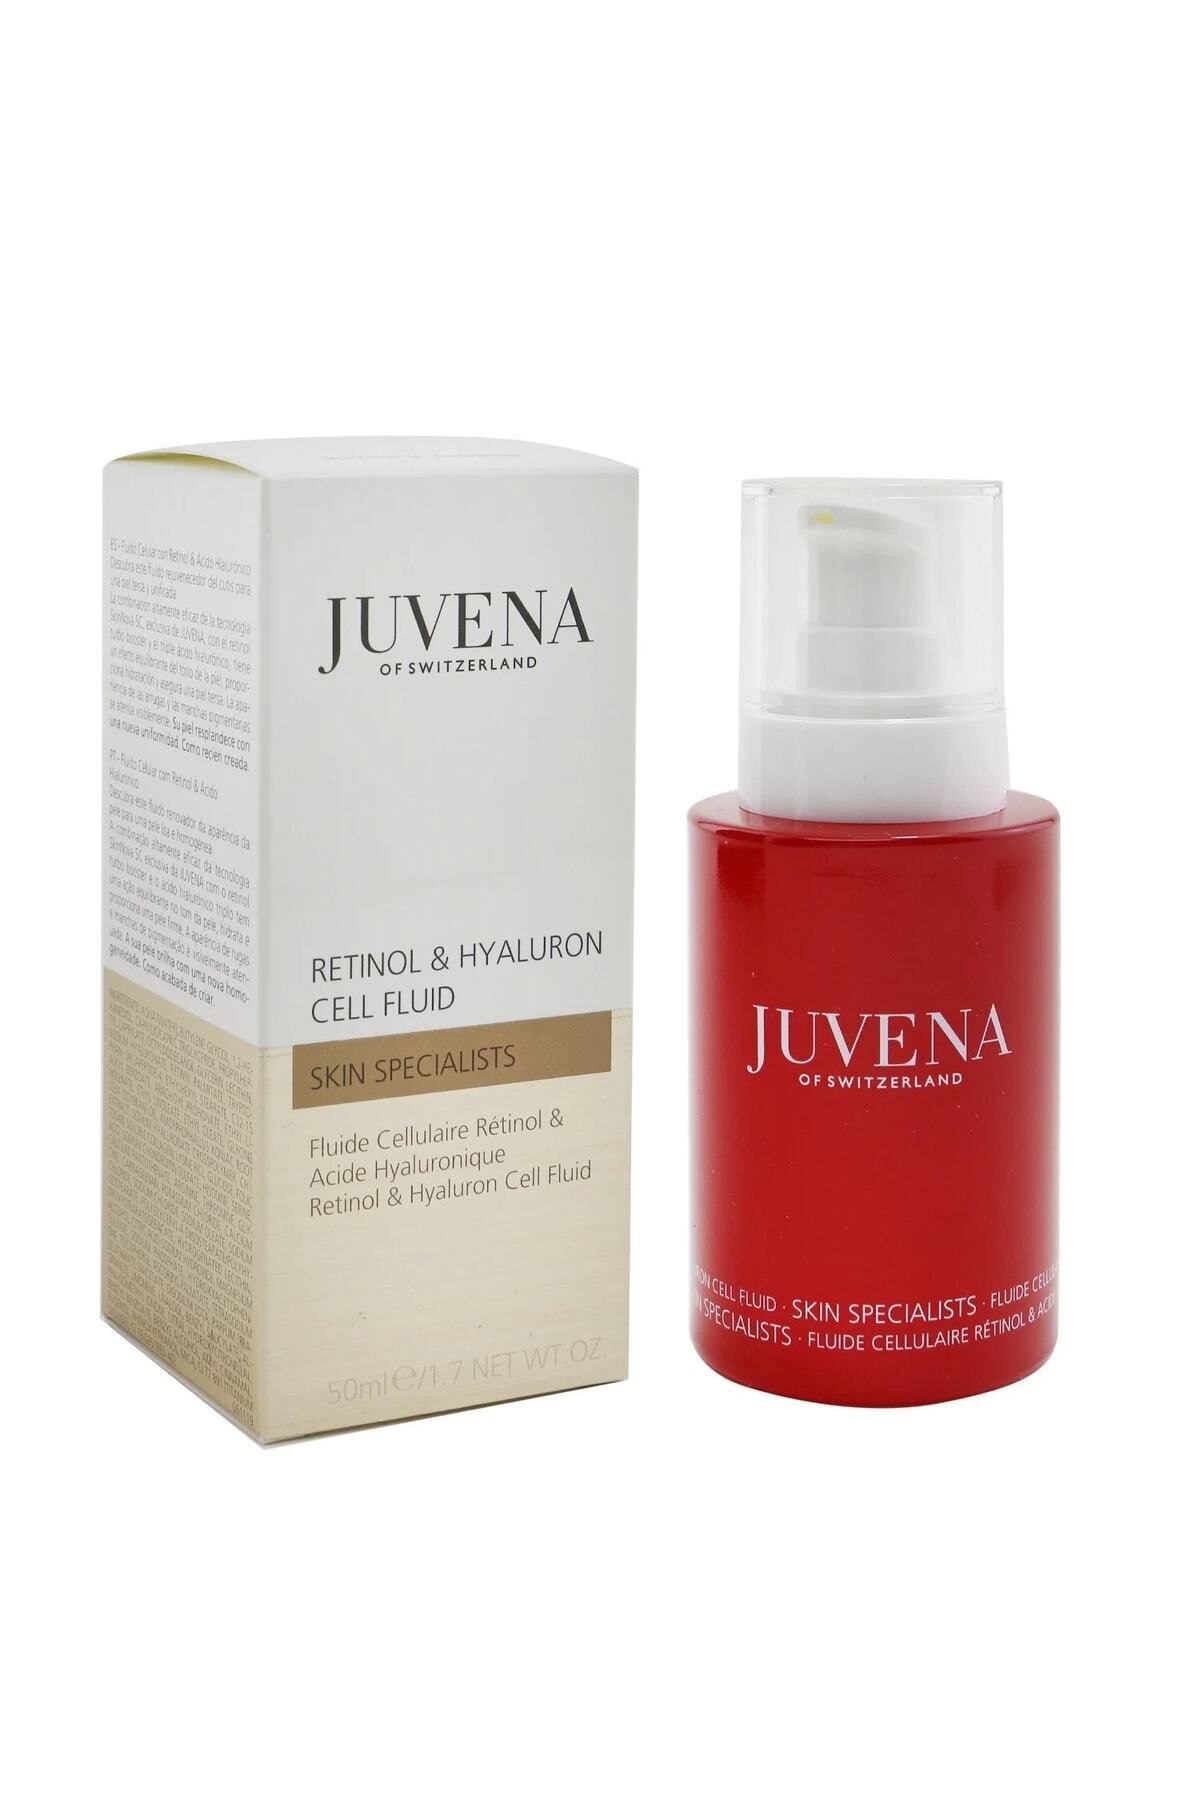 Juvena Retinol & Hyaluron Cell Fluid Anti-Aging Moisturizing Emulsion 50ml Facelight467